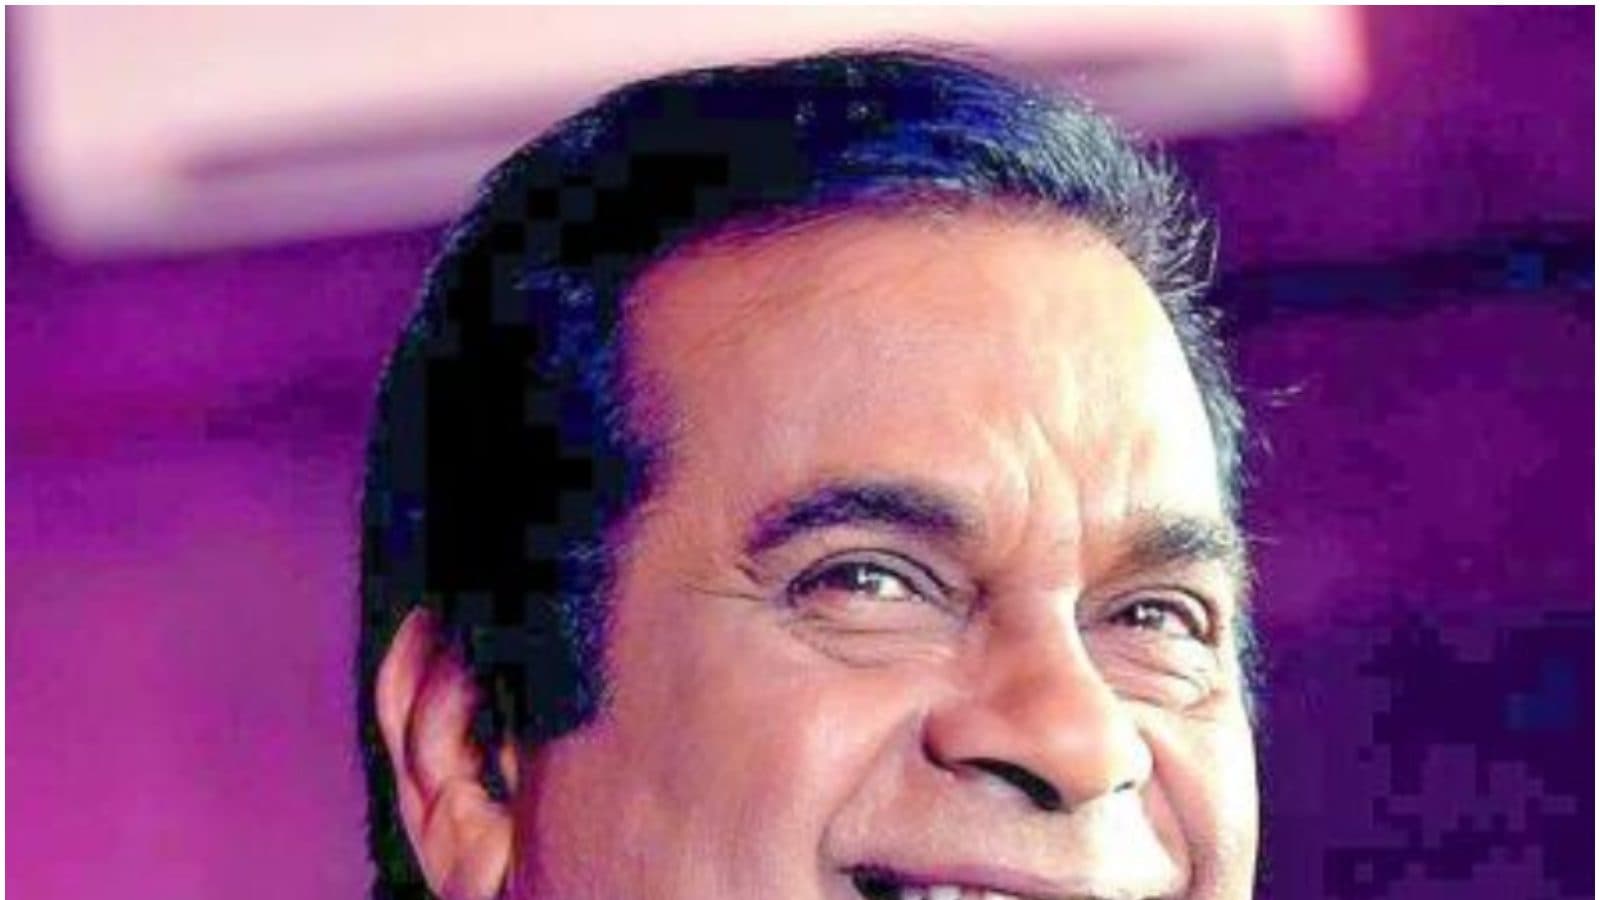 Brahmanandam Photos - Telugu Actor photos, images, gallery, stills and  clips - IndiaGlitz.com